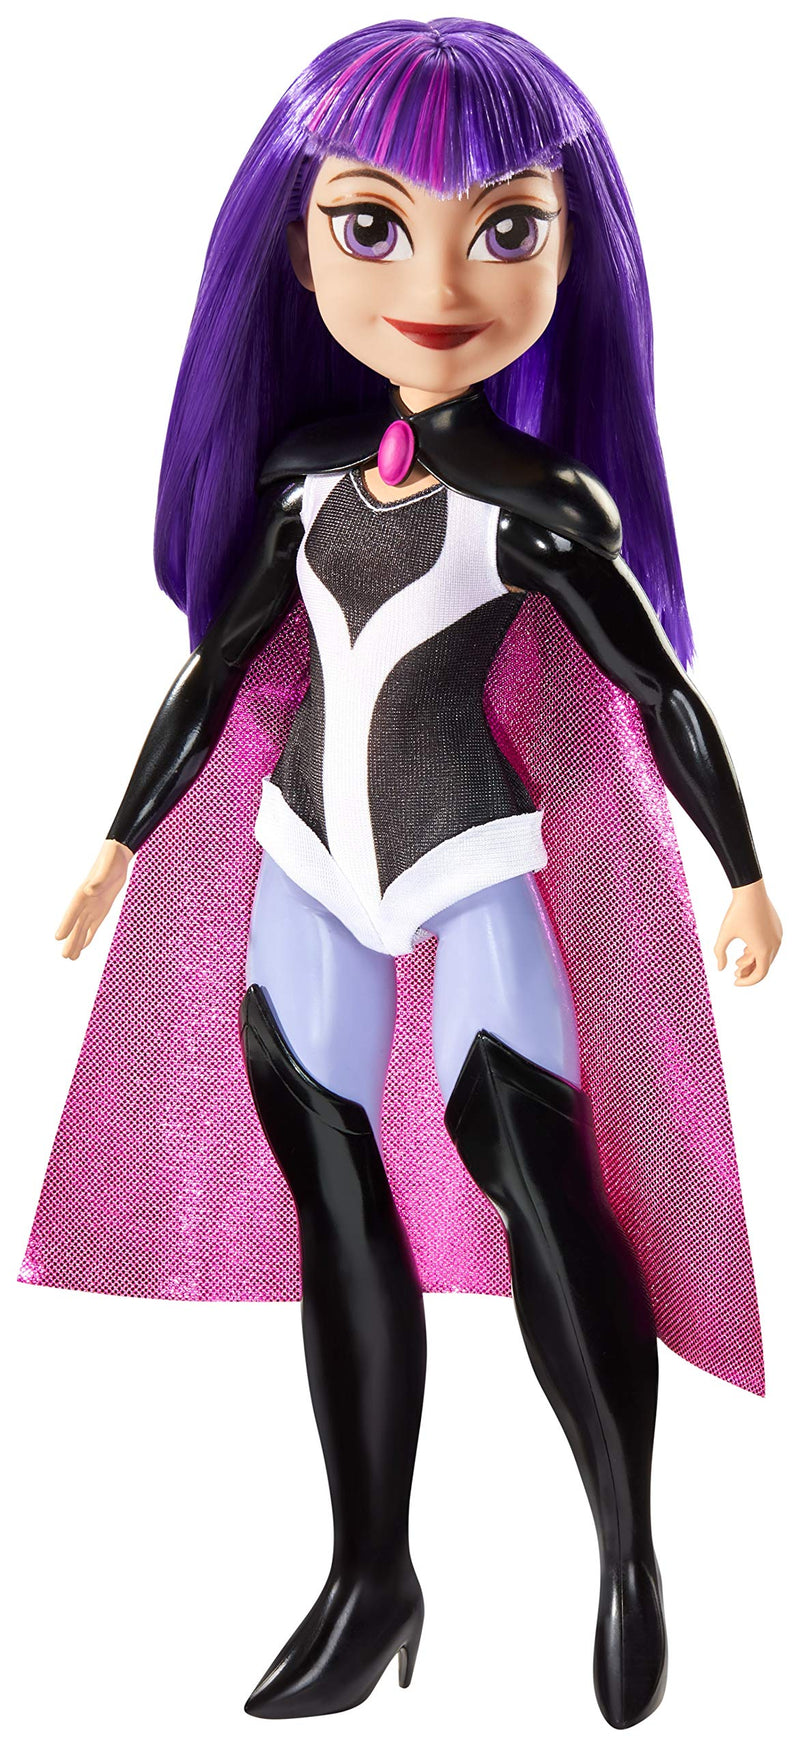 DC Super Hero Girls Zatana Doll with Themed Accessories